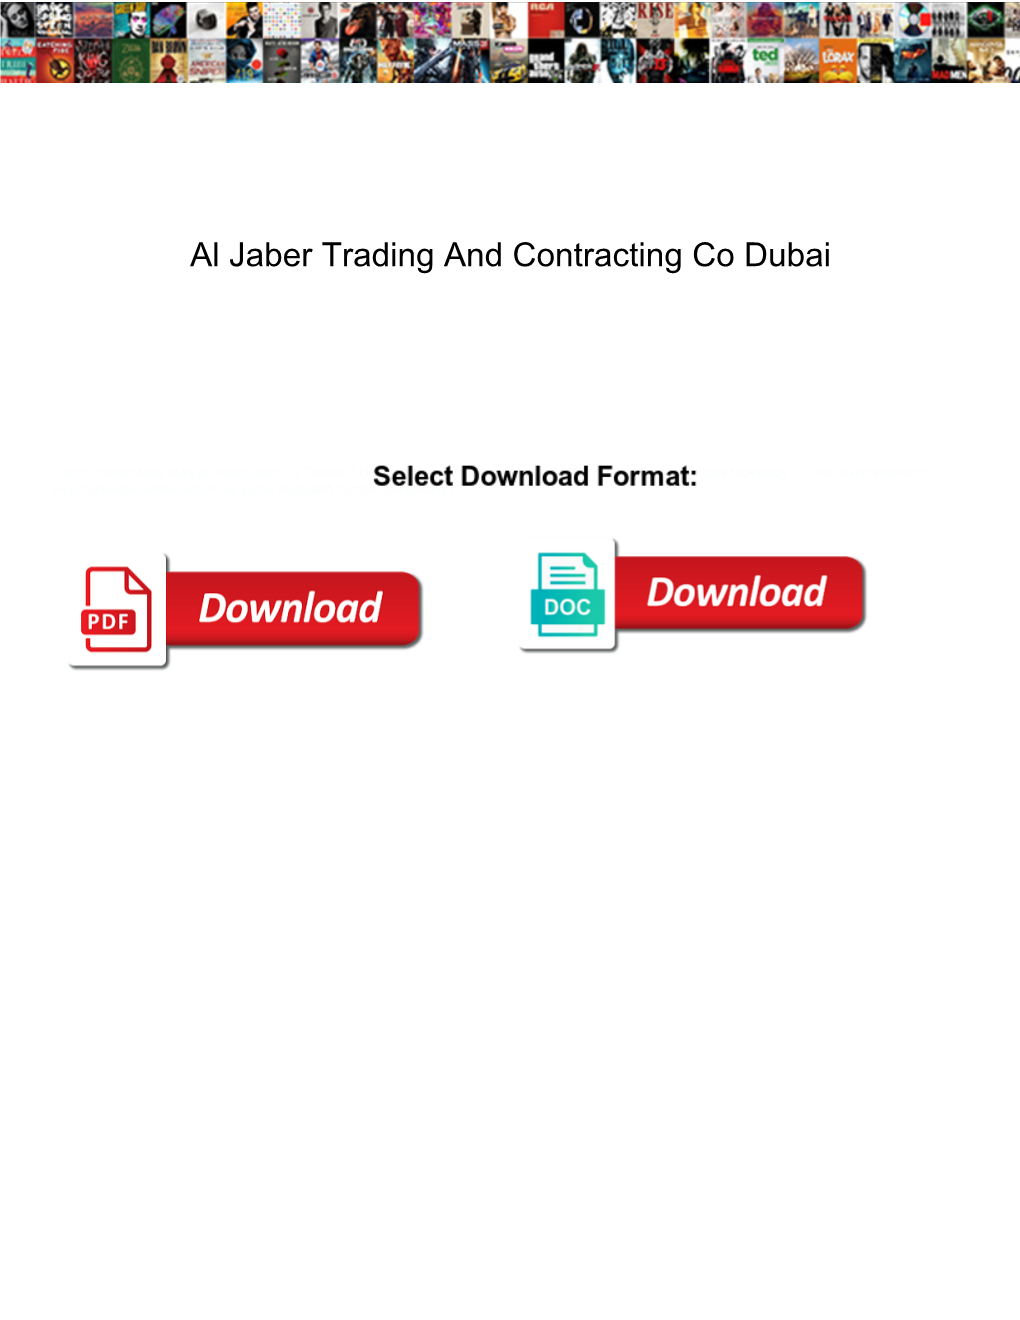 Al Jaber Trading and Contracting Co Dubai